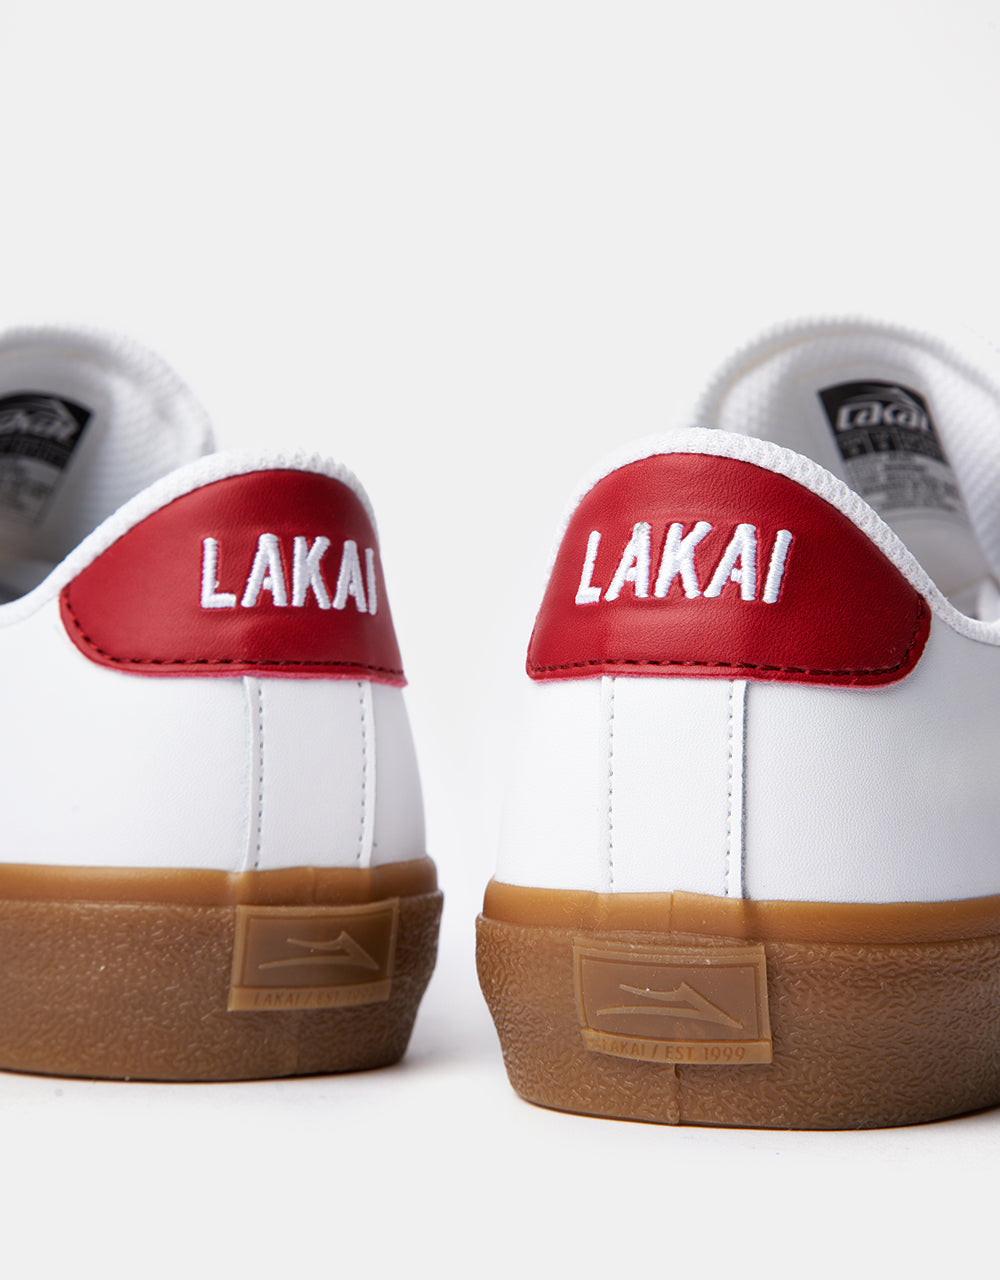 Lakai Newport Skate Shoes - White/Gum Leather